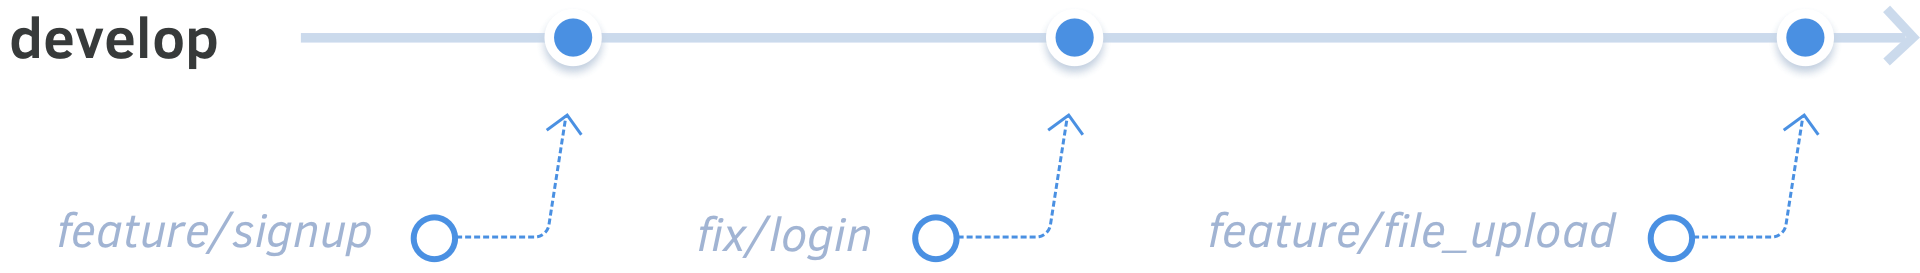 Develop branch illustration